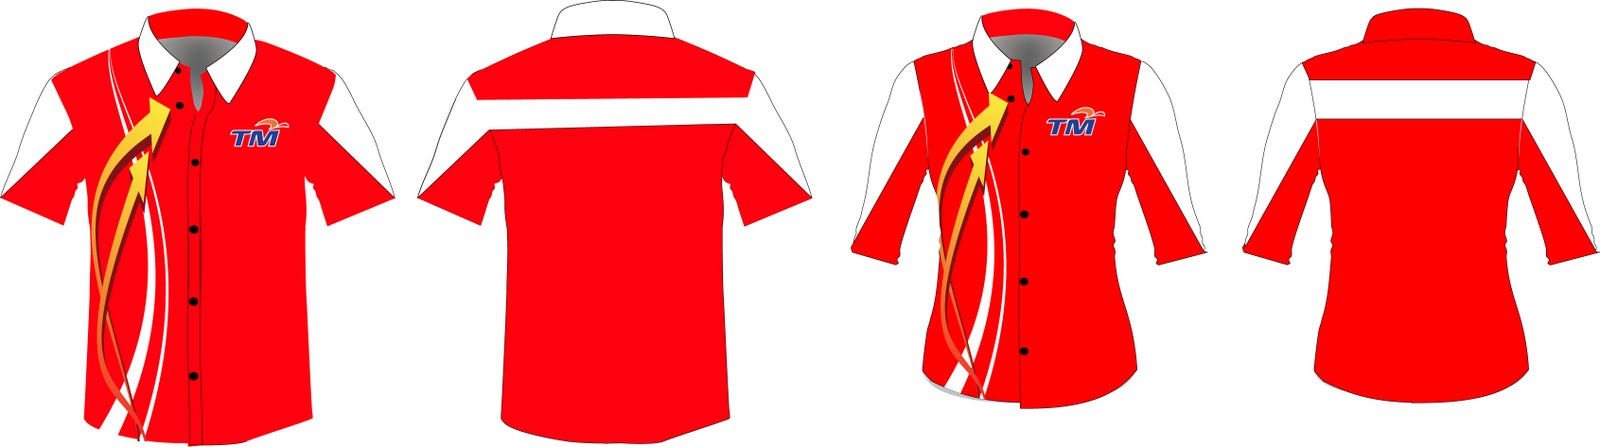 New Design F1 Shirt TM - Free F1 Shirt Mockup